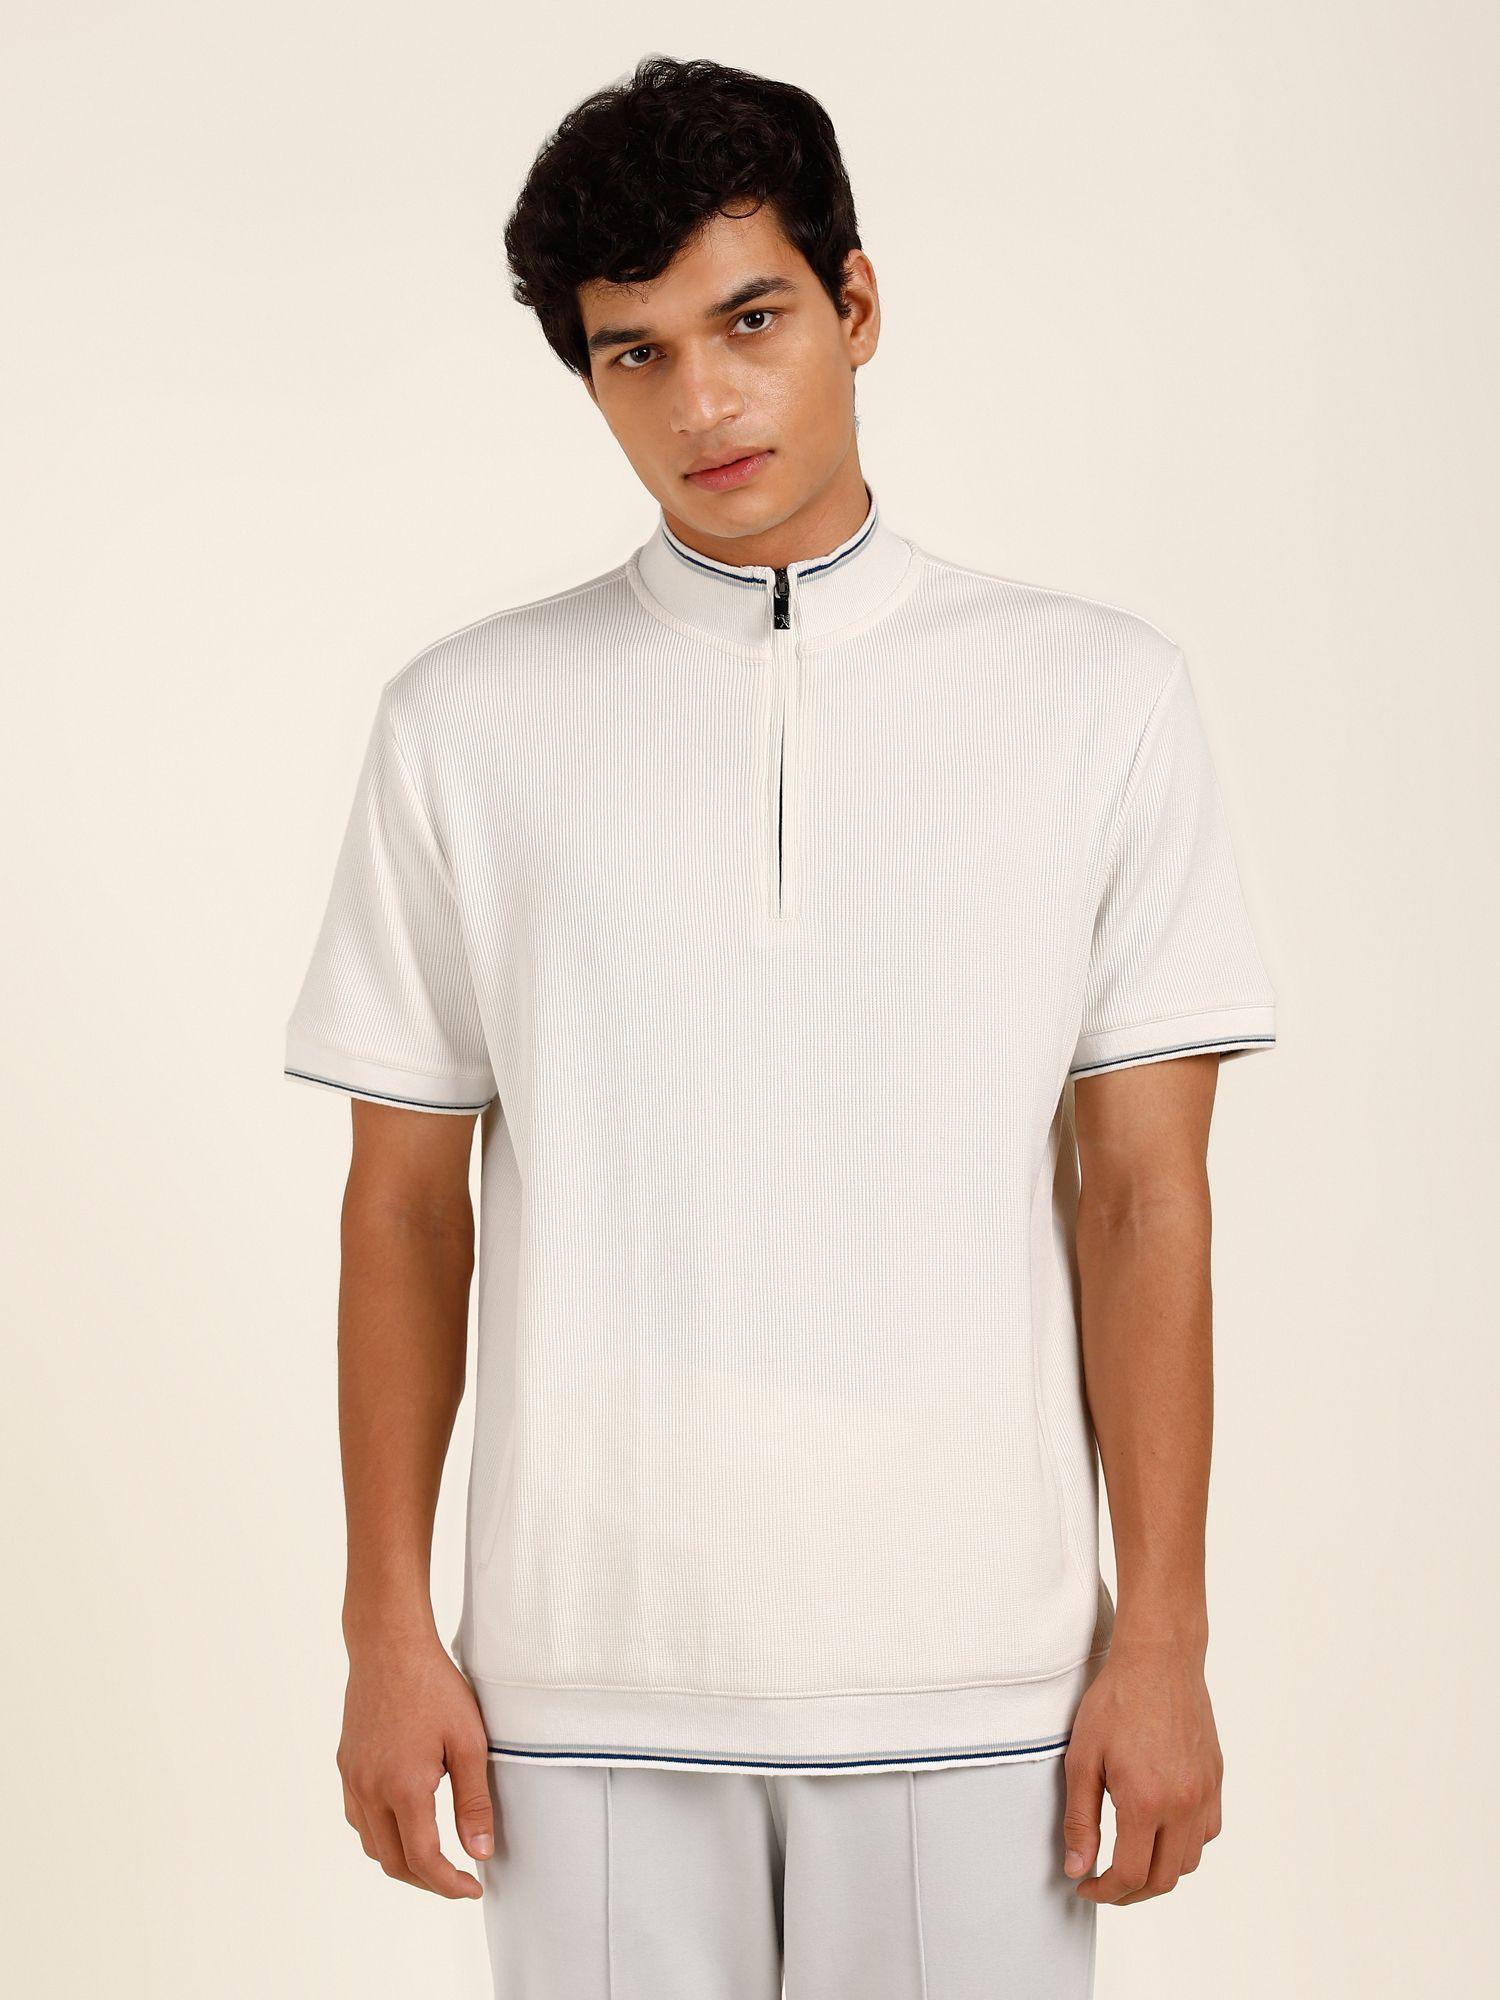 half sleeve zipped neck pullover white t-shirt